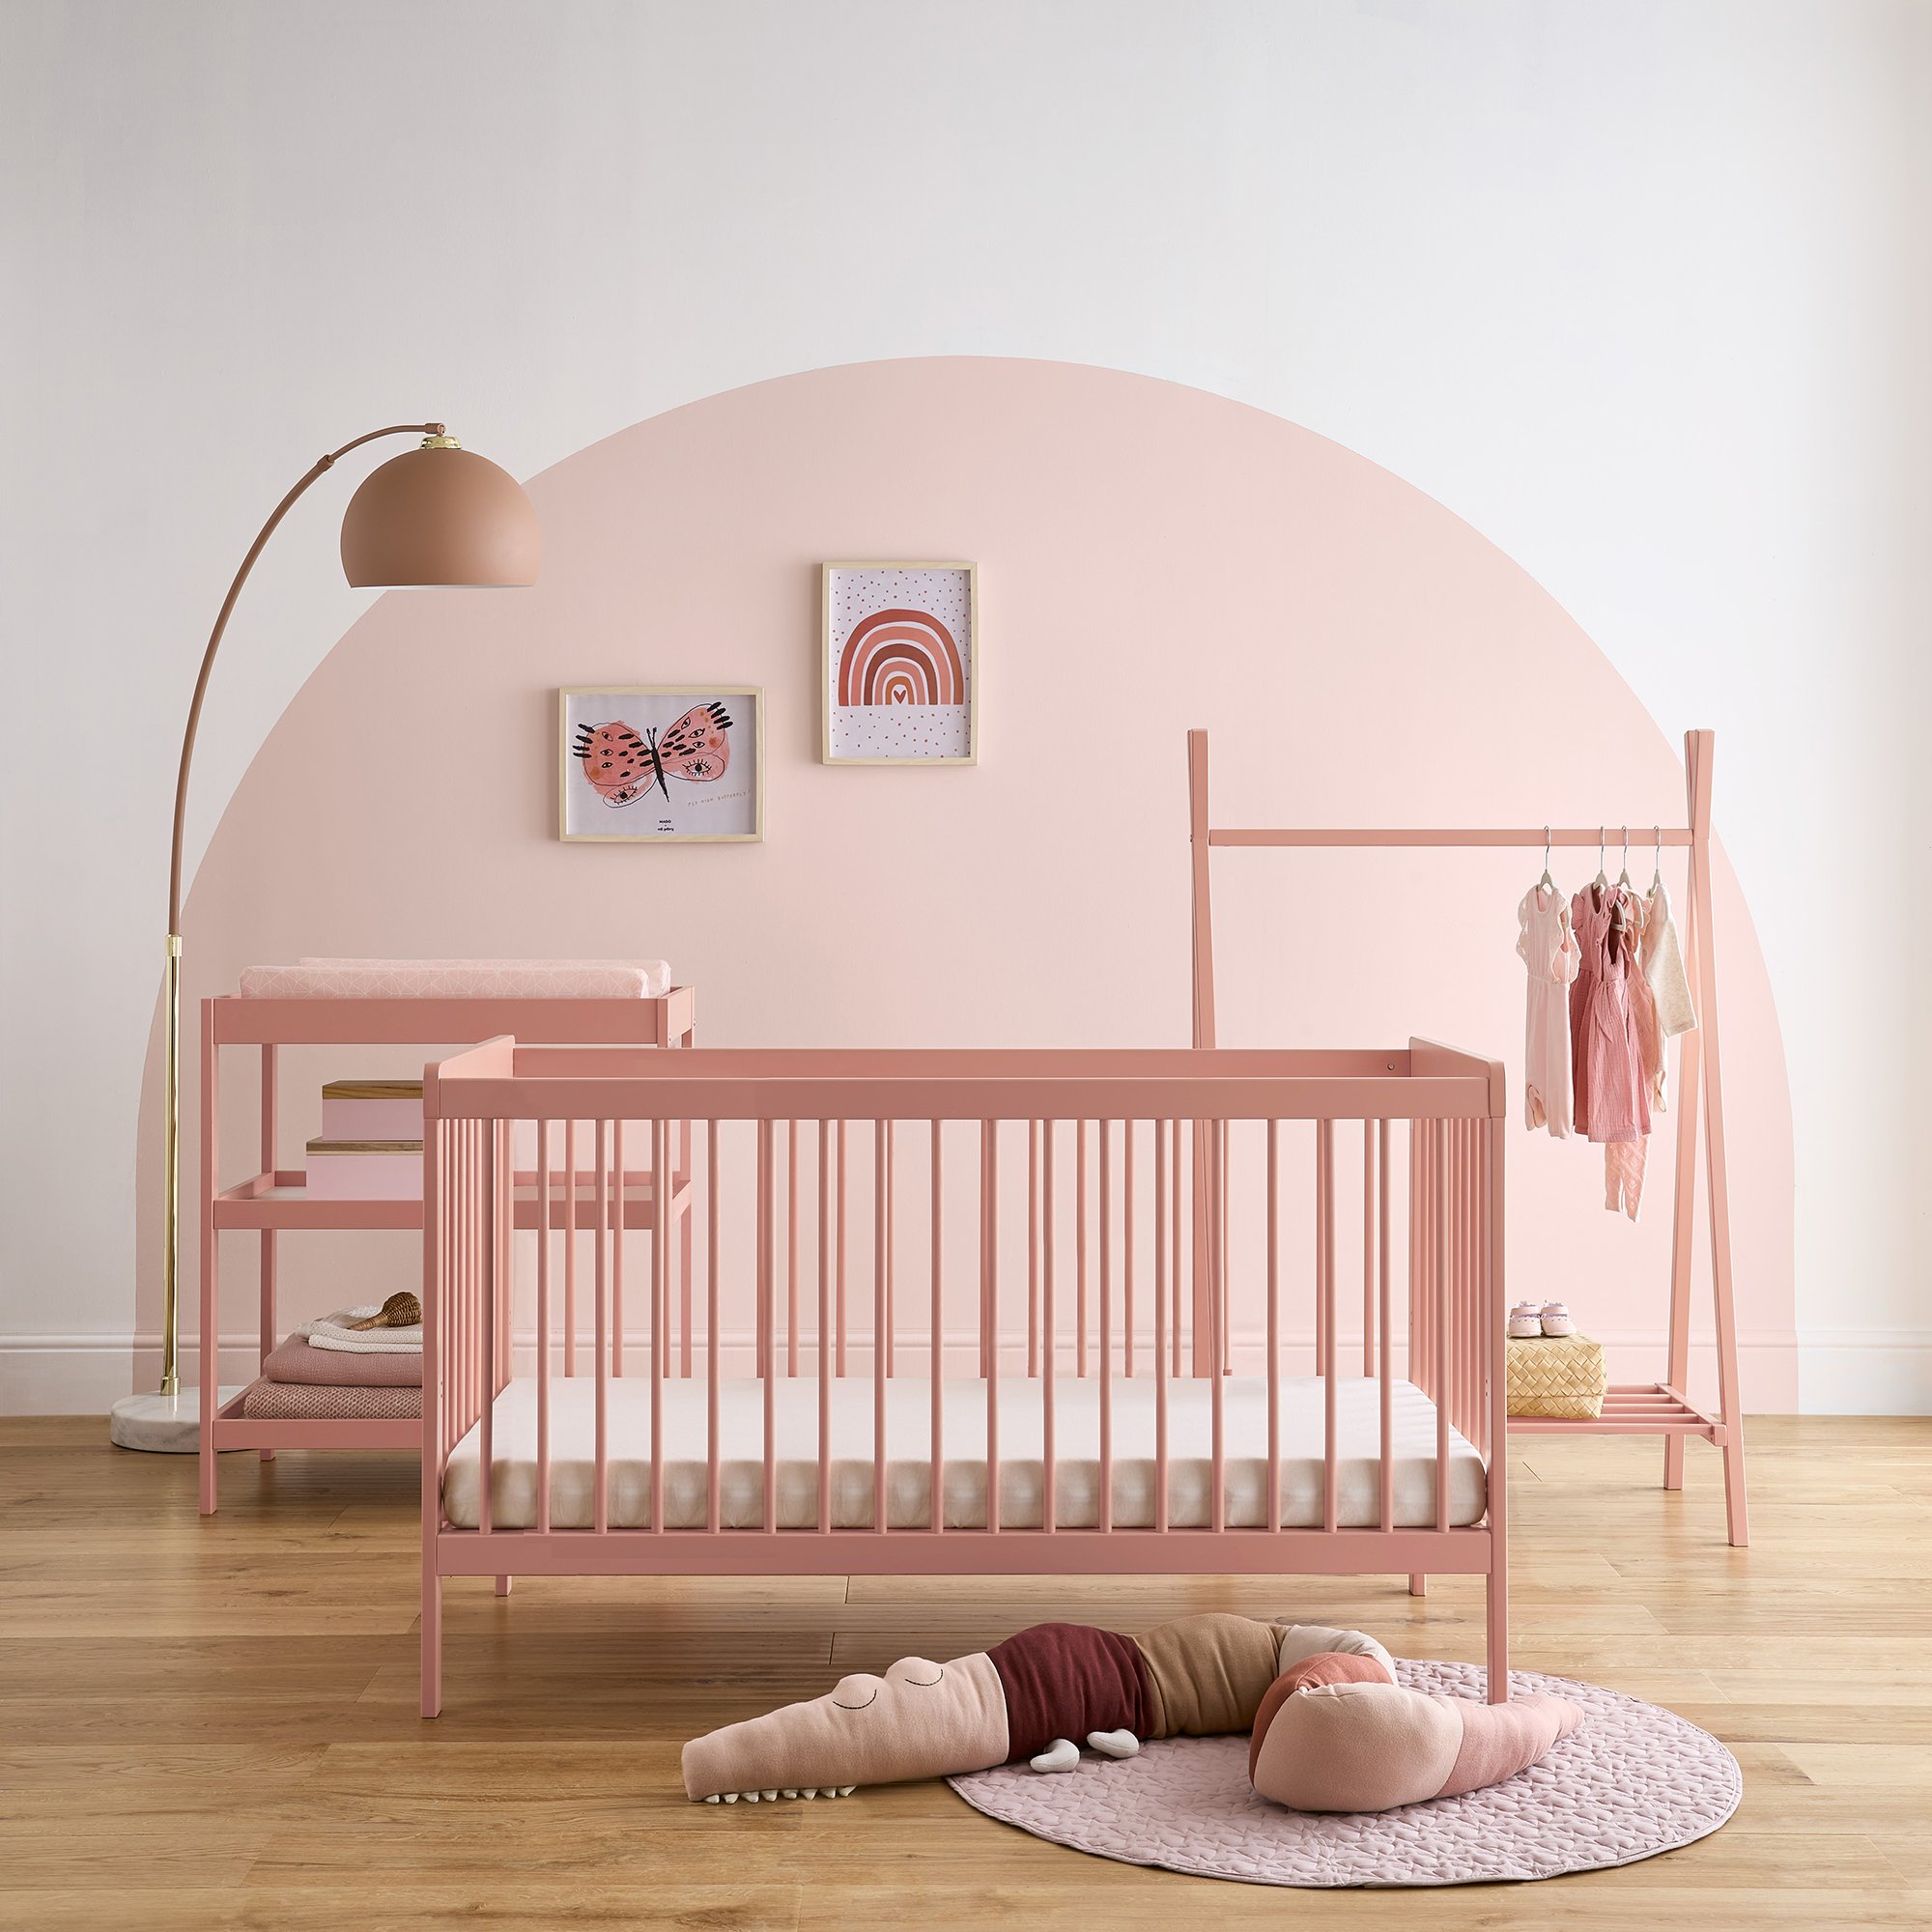 Cuddleco Nola 3 Piece Nursery Furniture Set - Pink